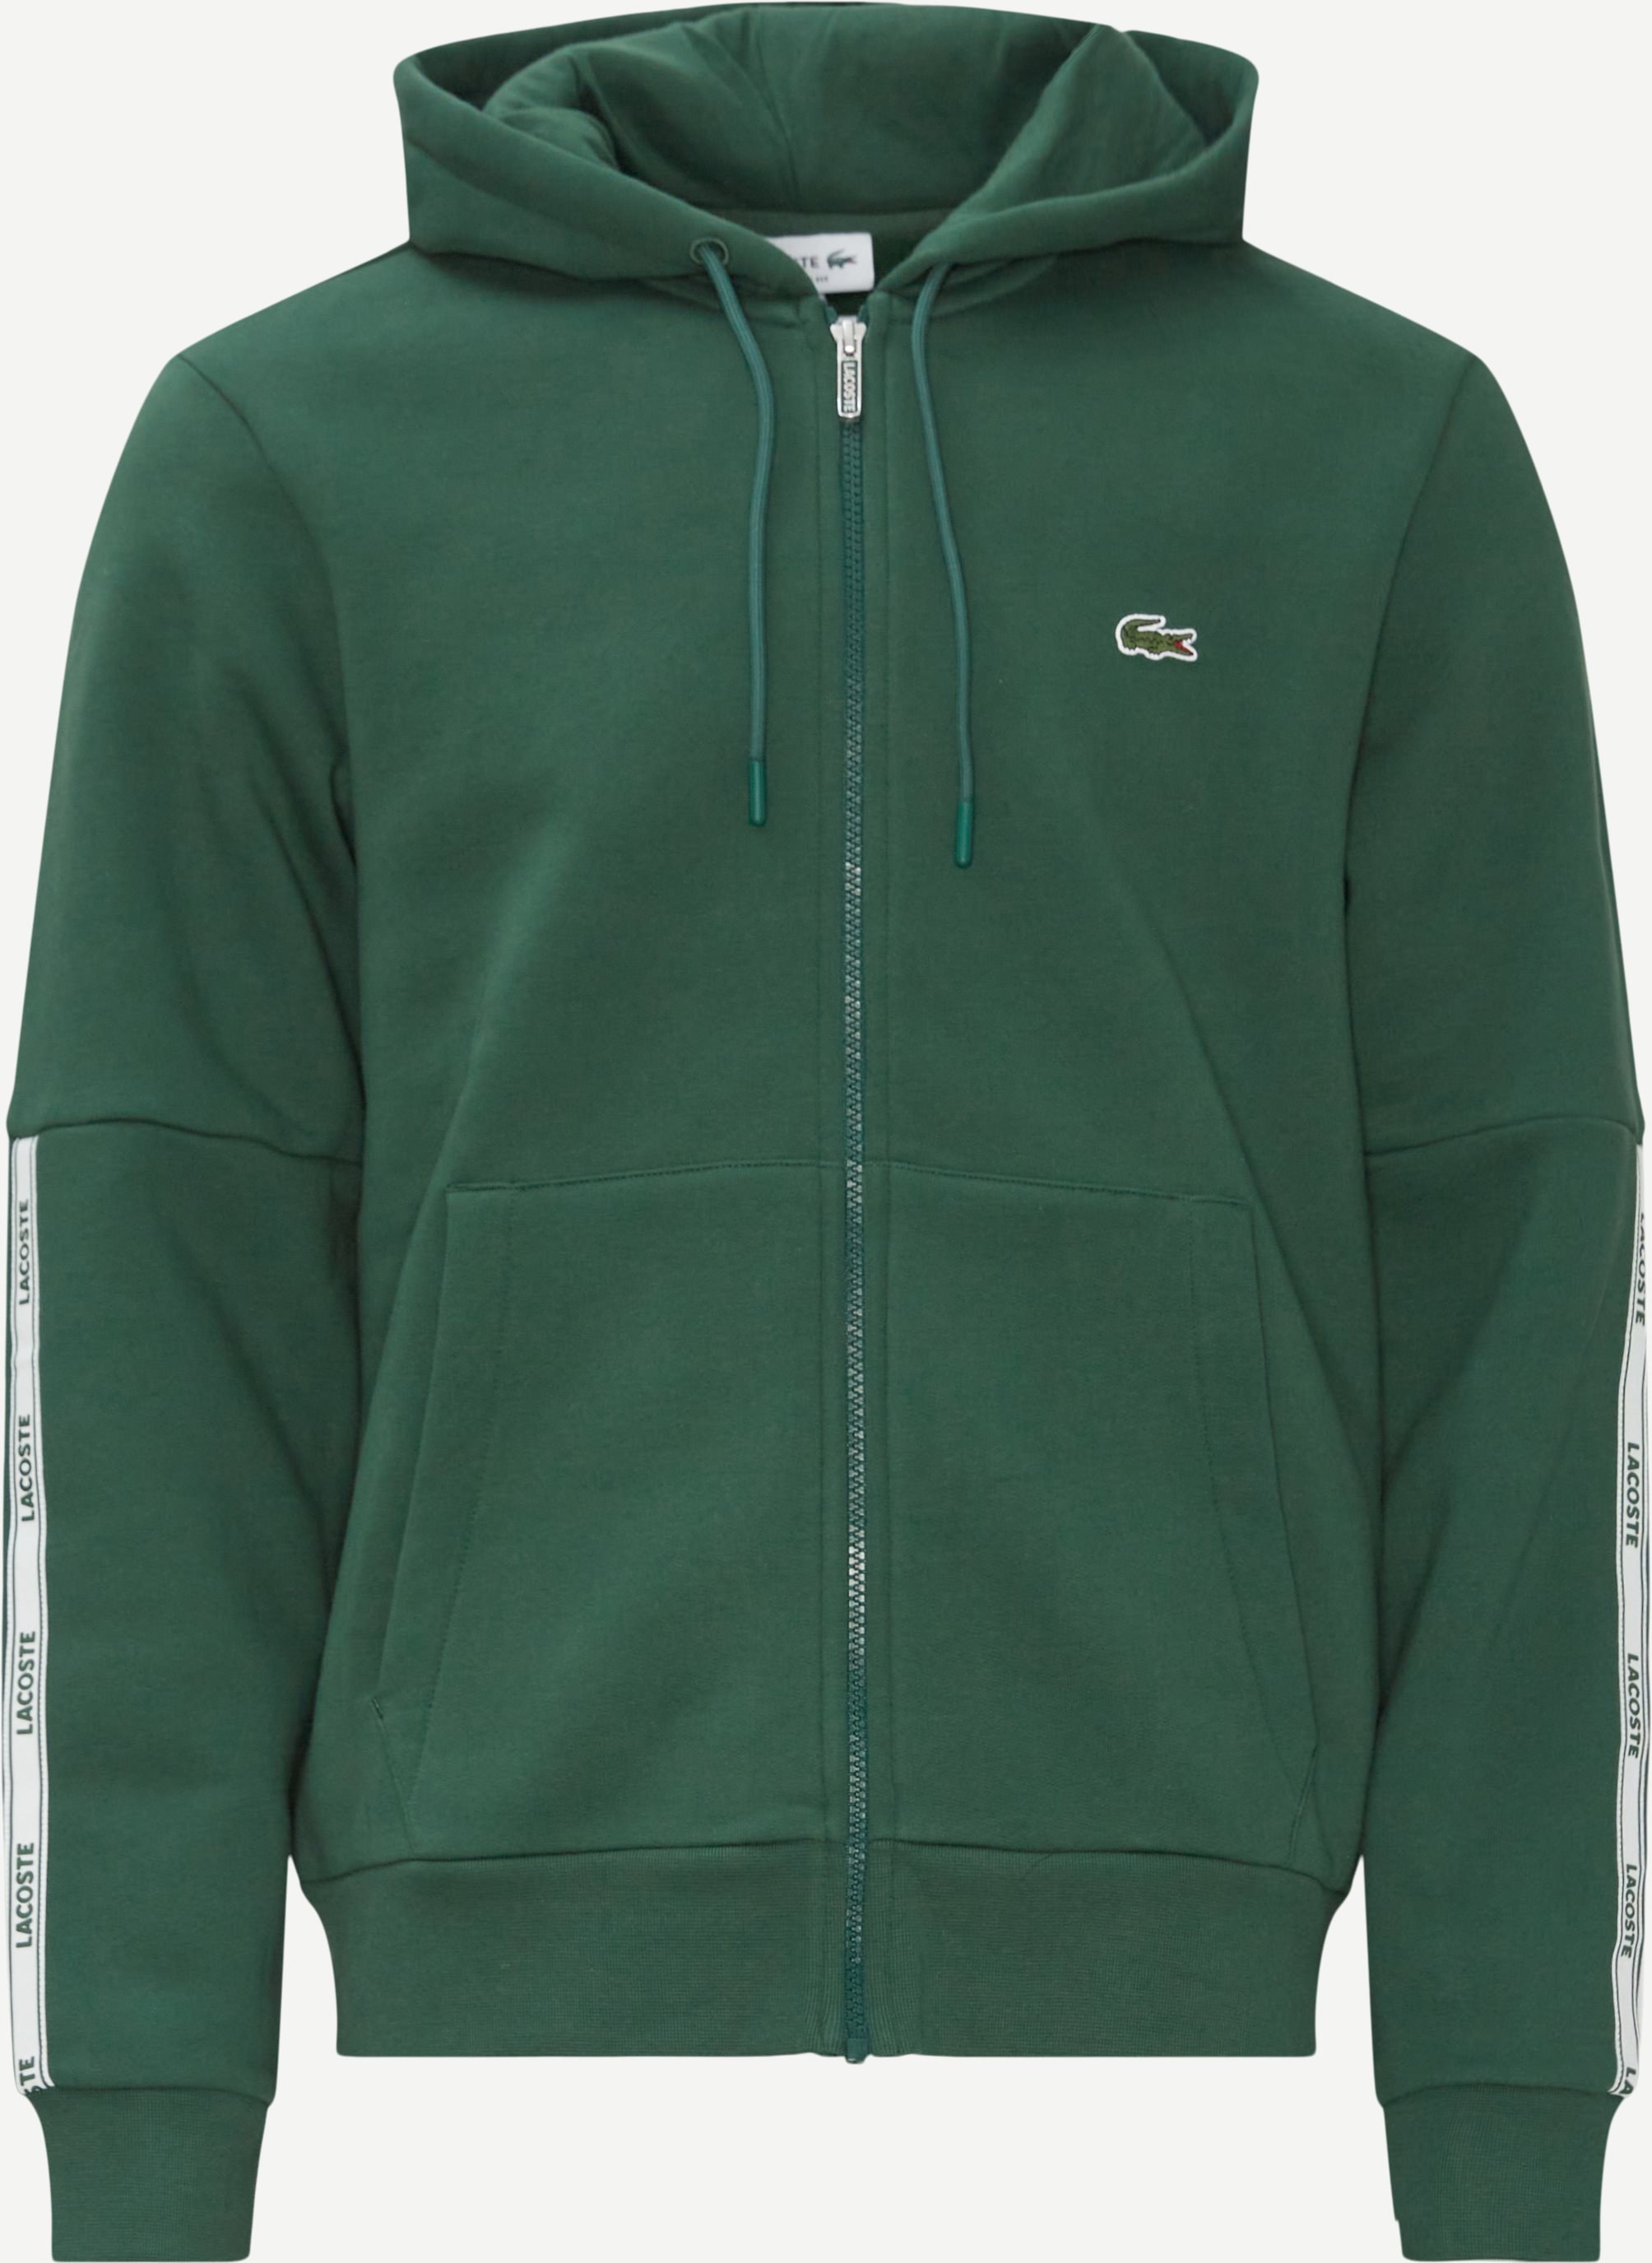 Sweatshirts - Classic fit - Green